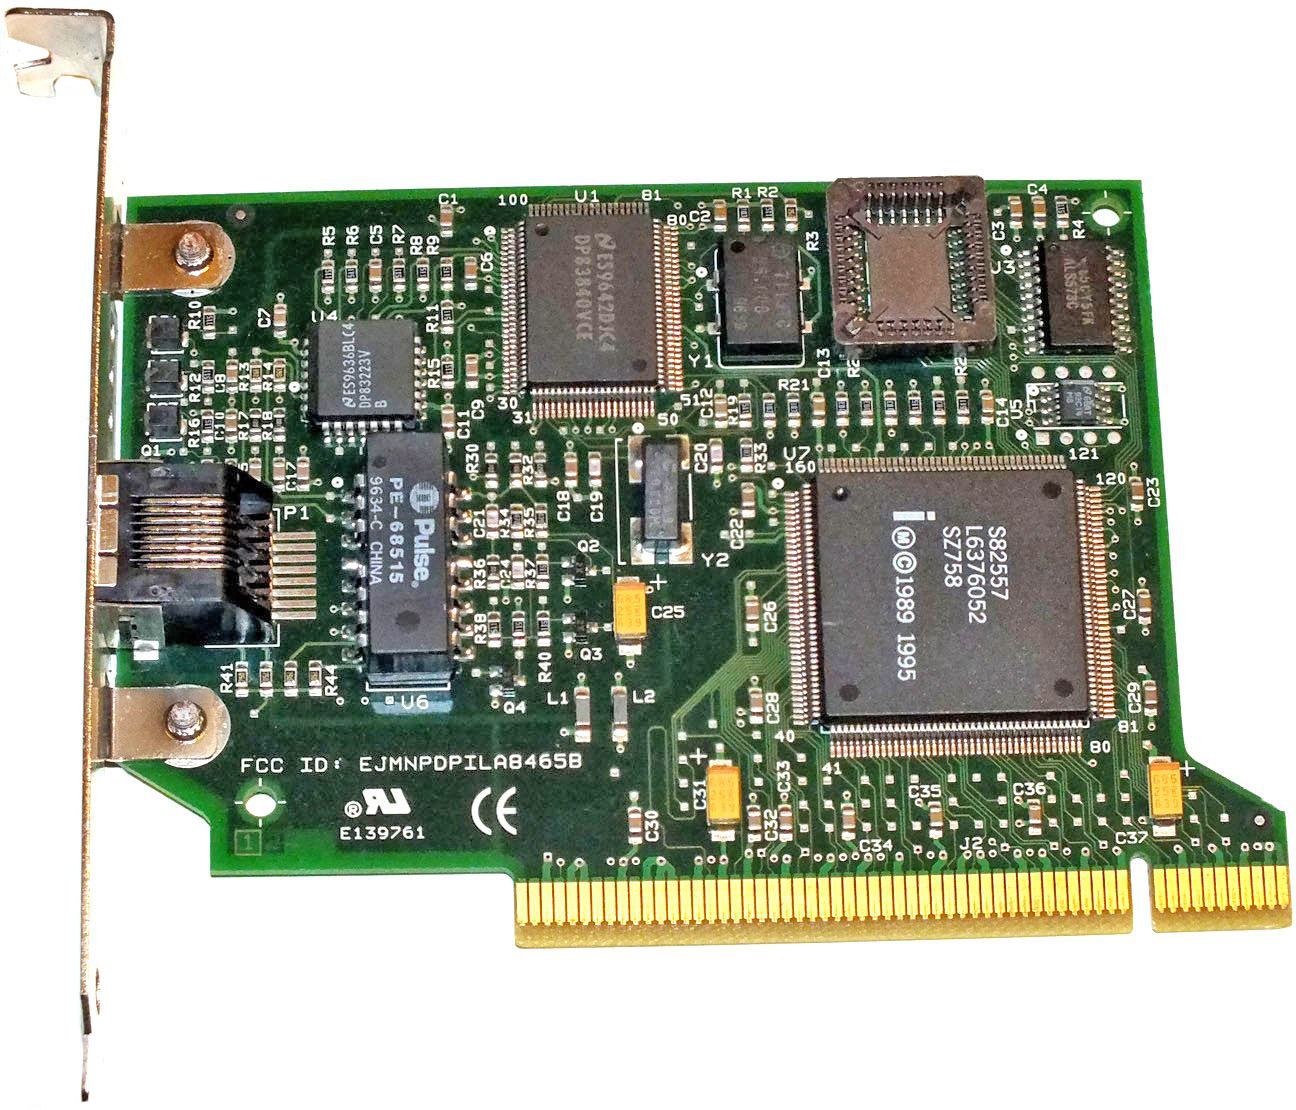   INTEL S82557 PCI /